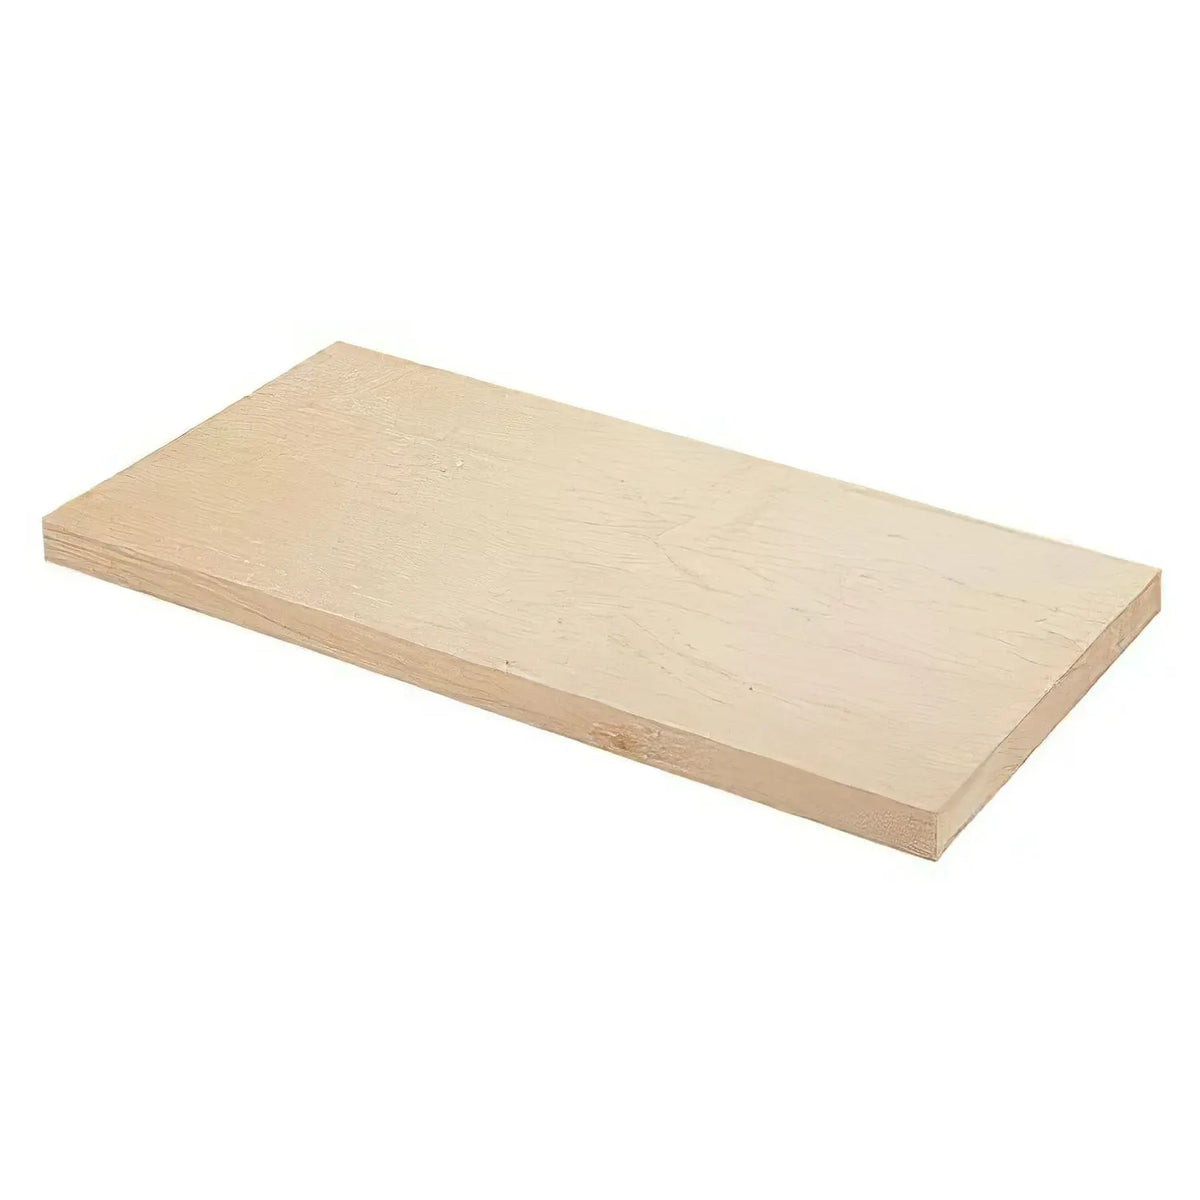 MIYABI URUSHI KOGEI Single Piece Canadian Cypress Wooden Cutting Board